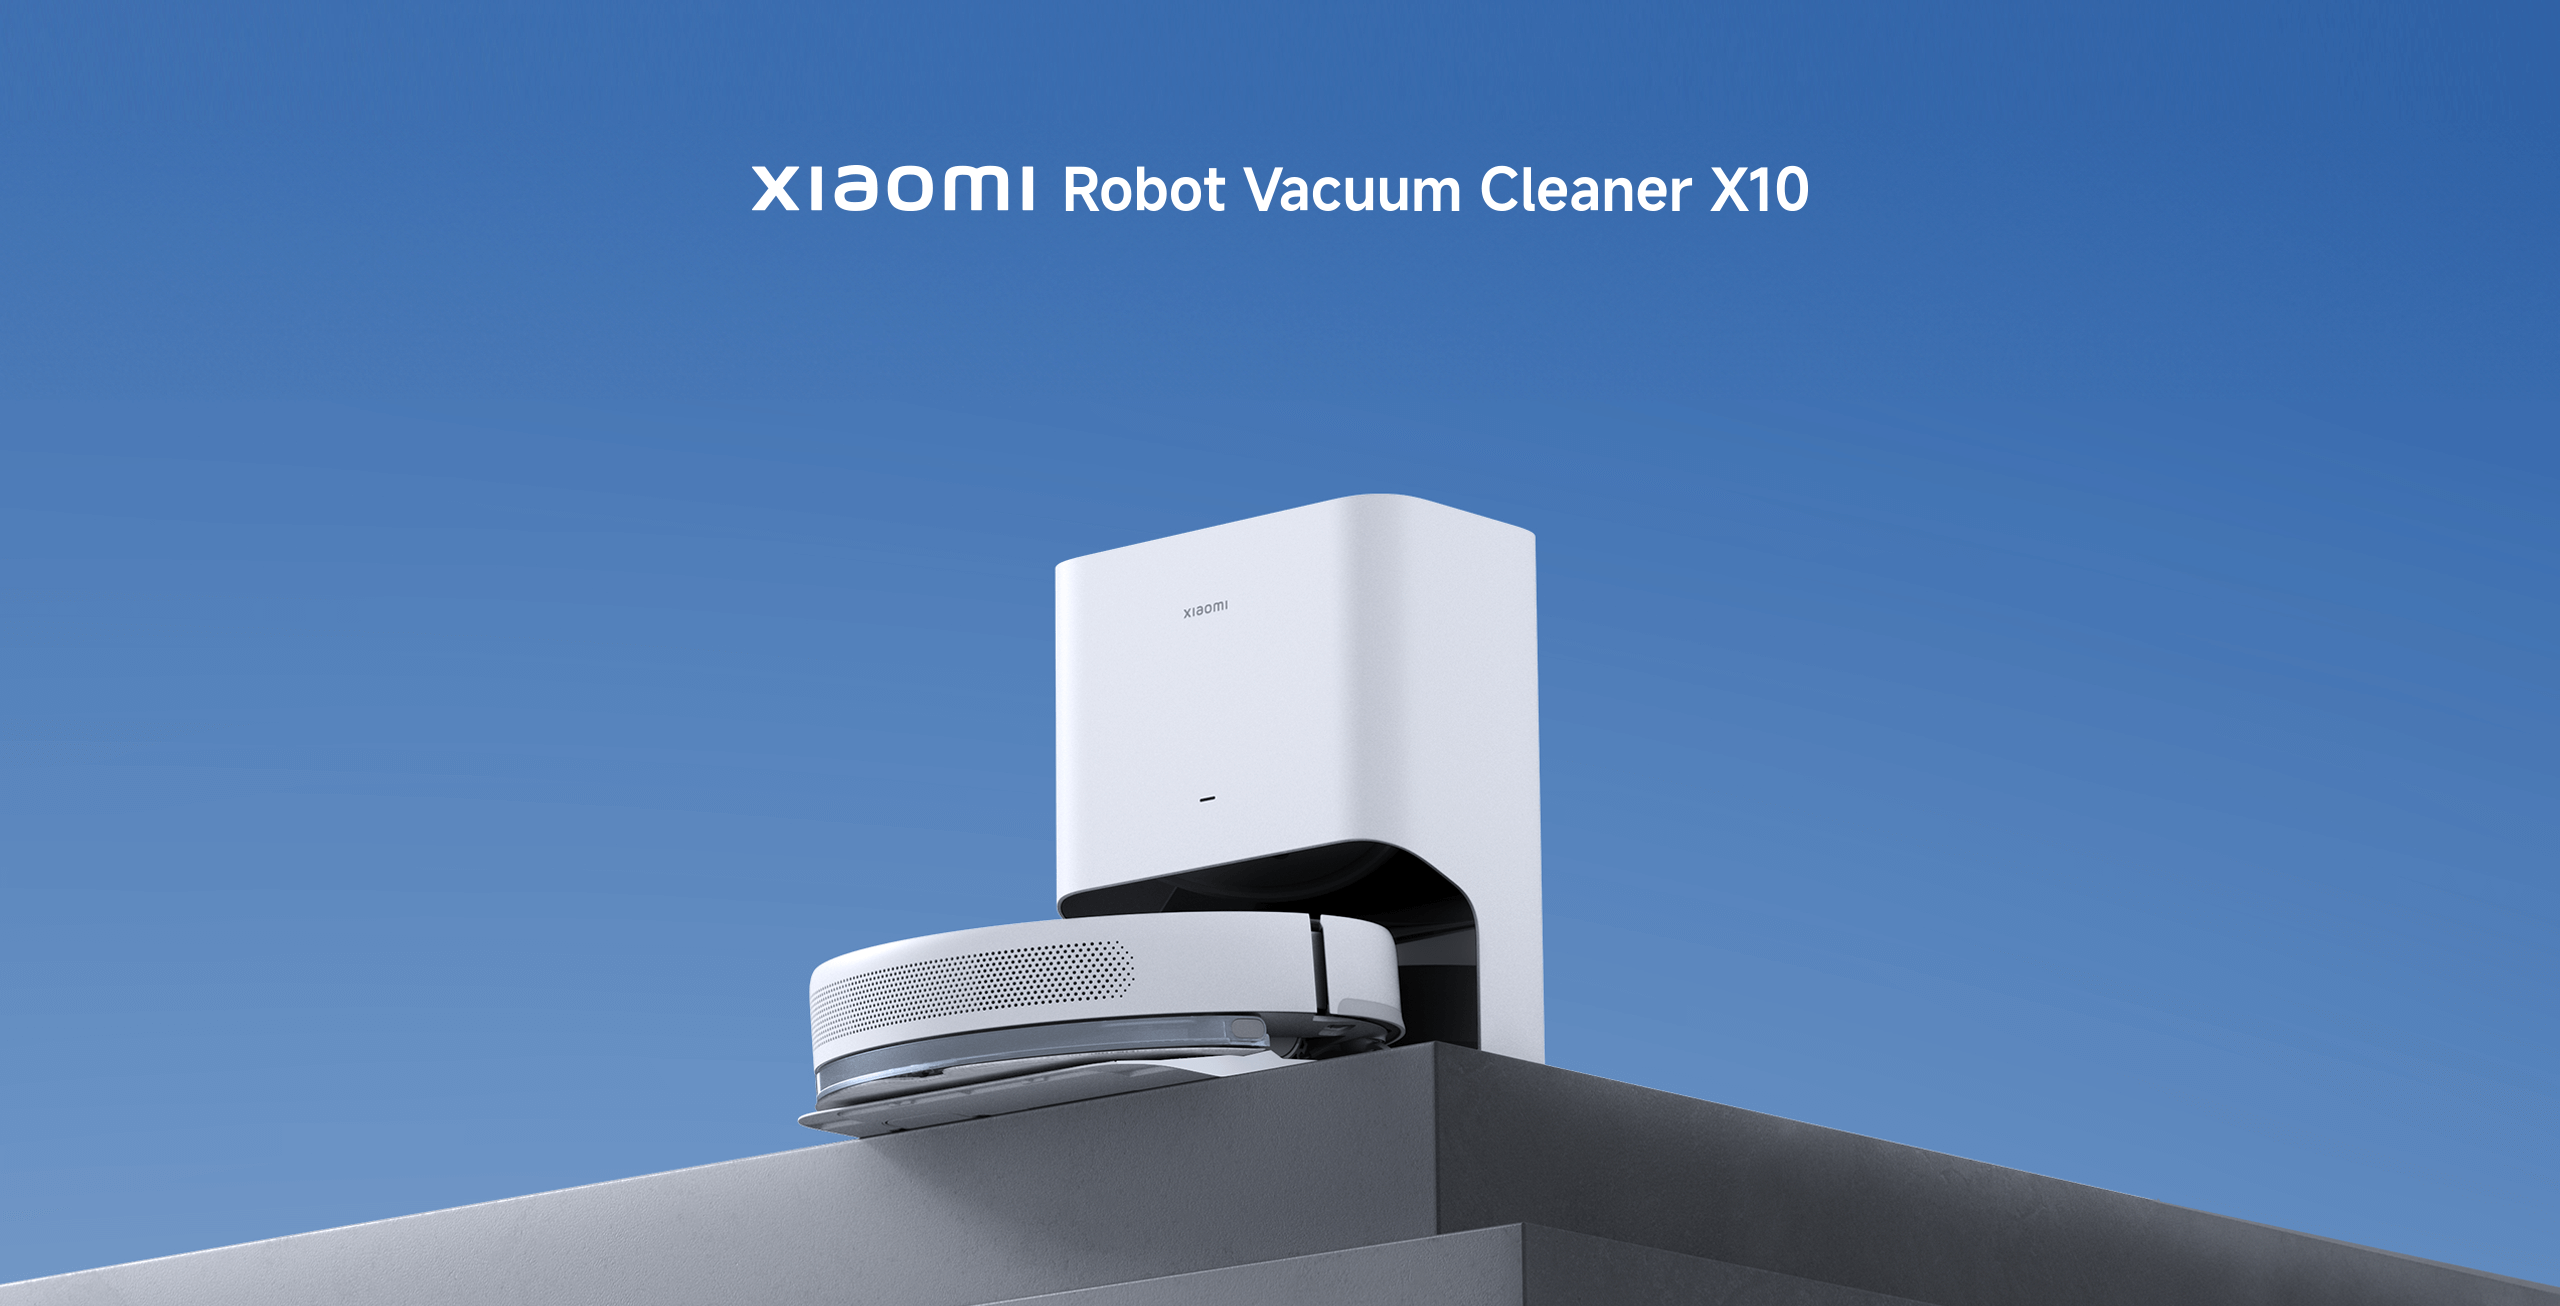 Xiaomi Robot Vacuum Cleaner X10